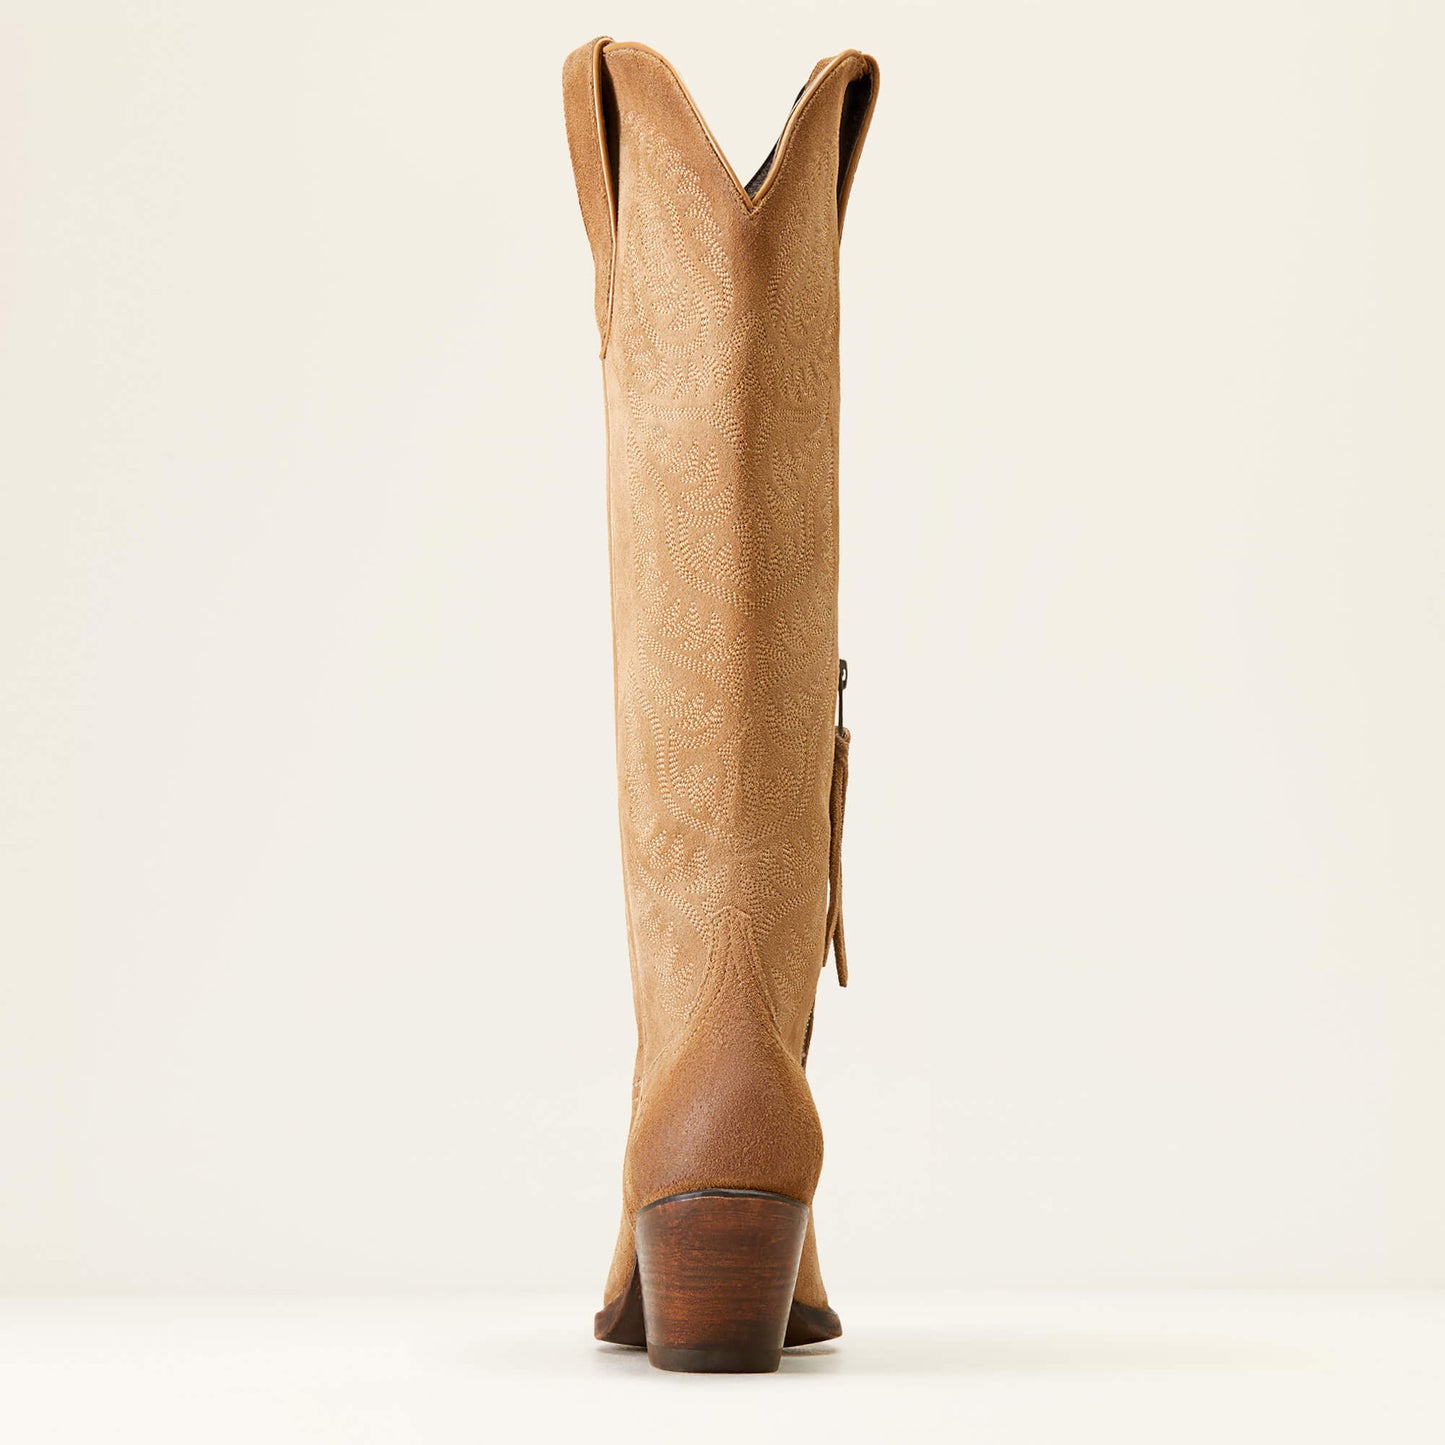 The Ariat Laramie StretchFit Western Boot - Distressed Dijon Suede